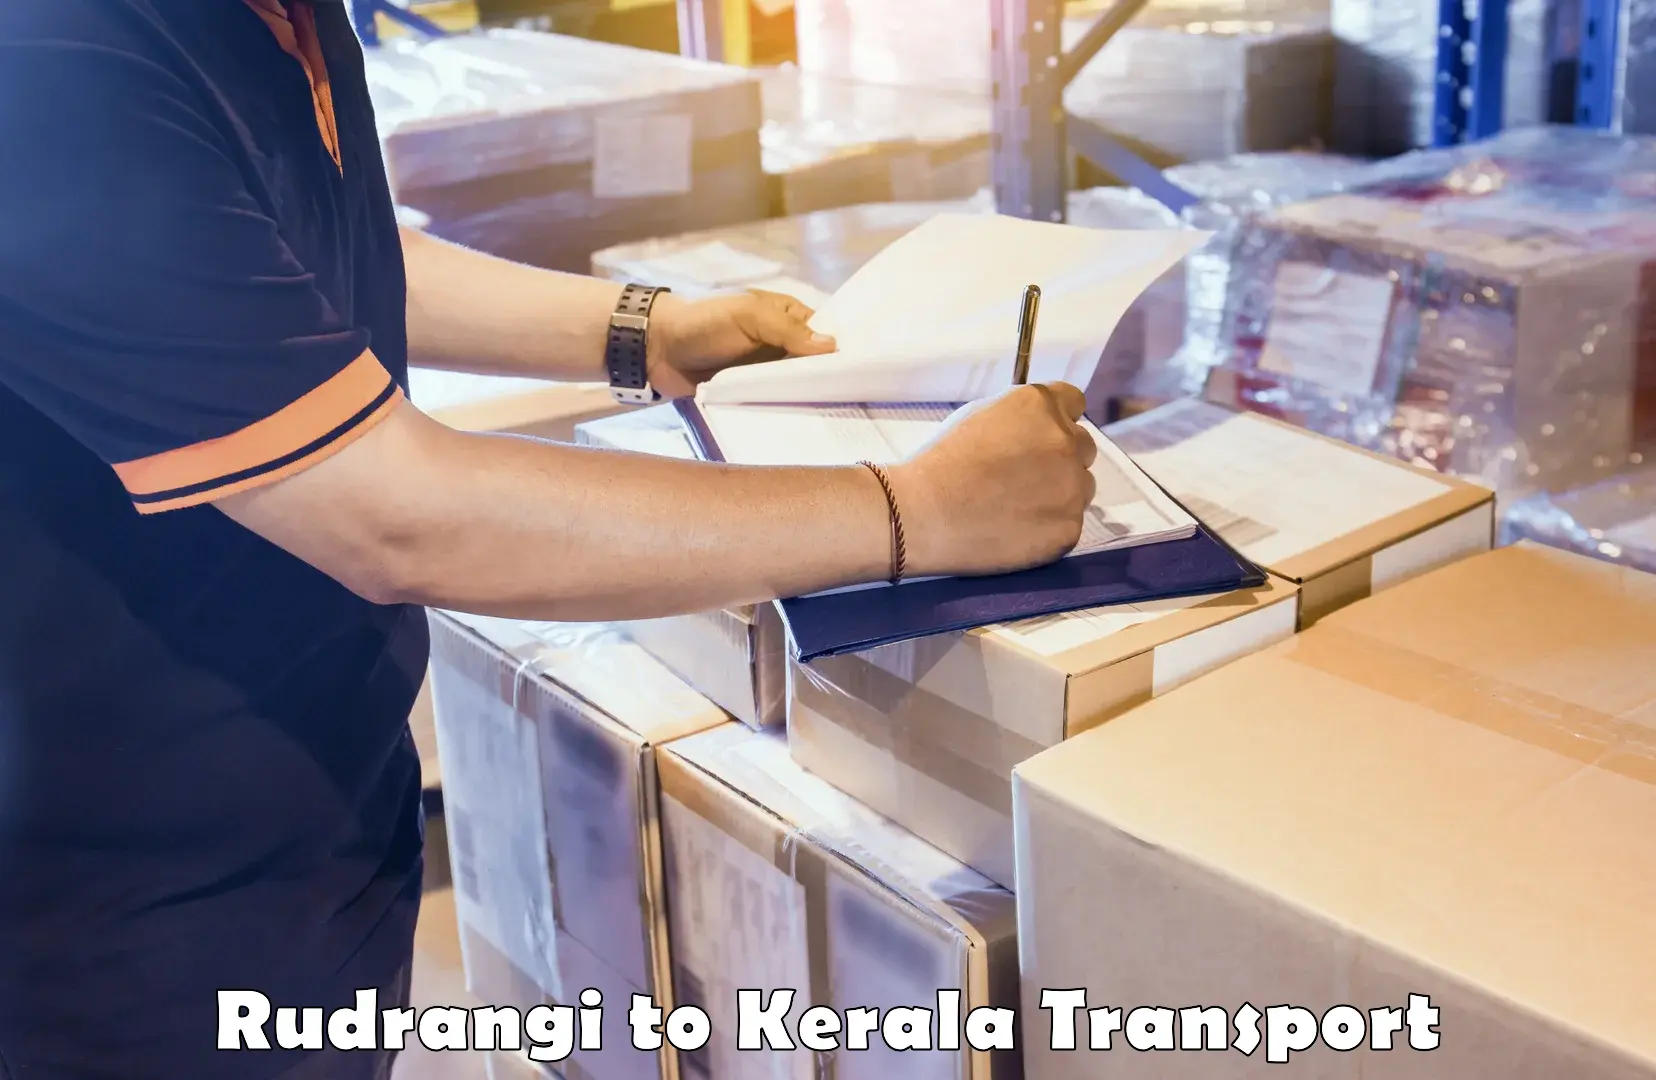 Transport in sharing Rudrangi to Alappuzha